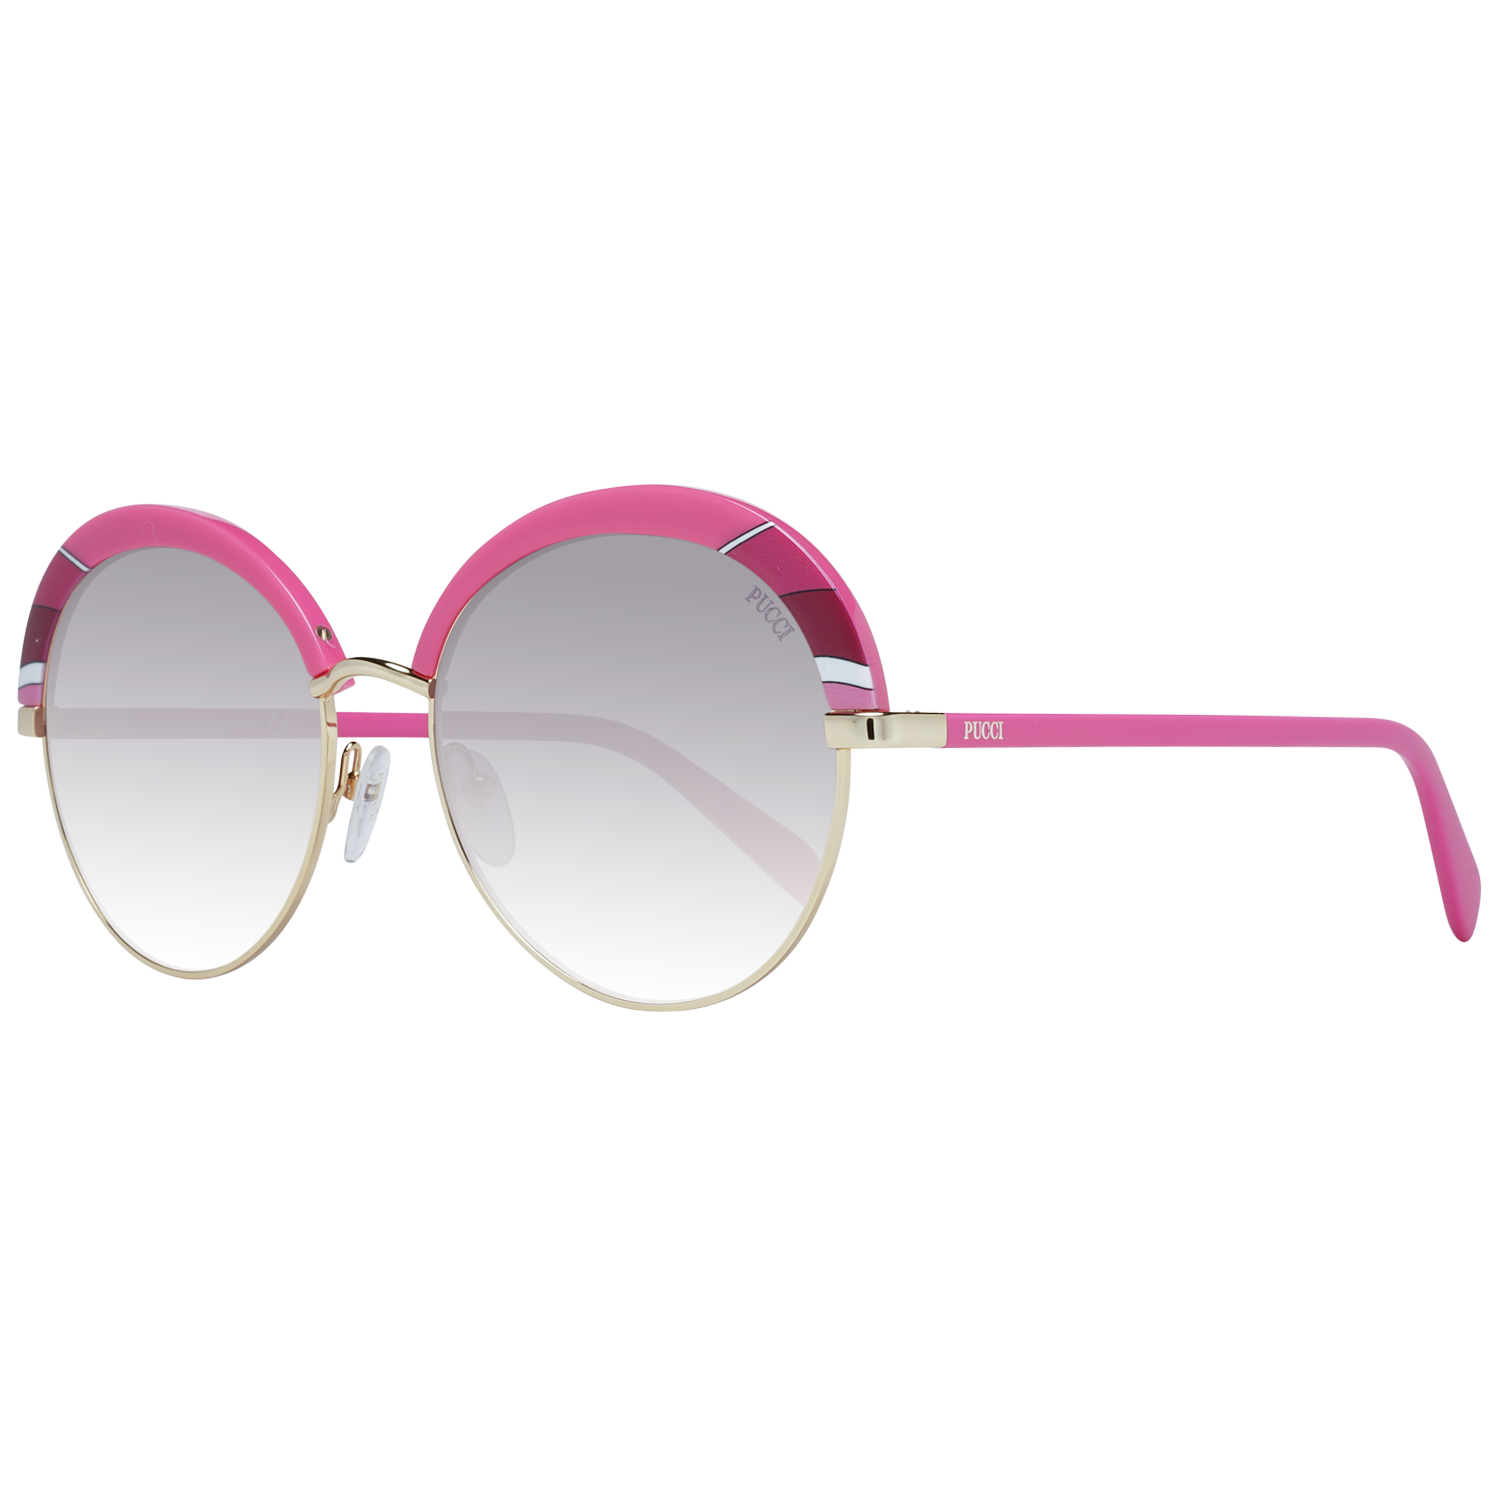 Emilio Pucci Women's Round Frame Sunglasses